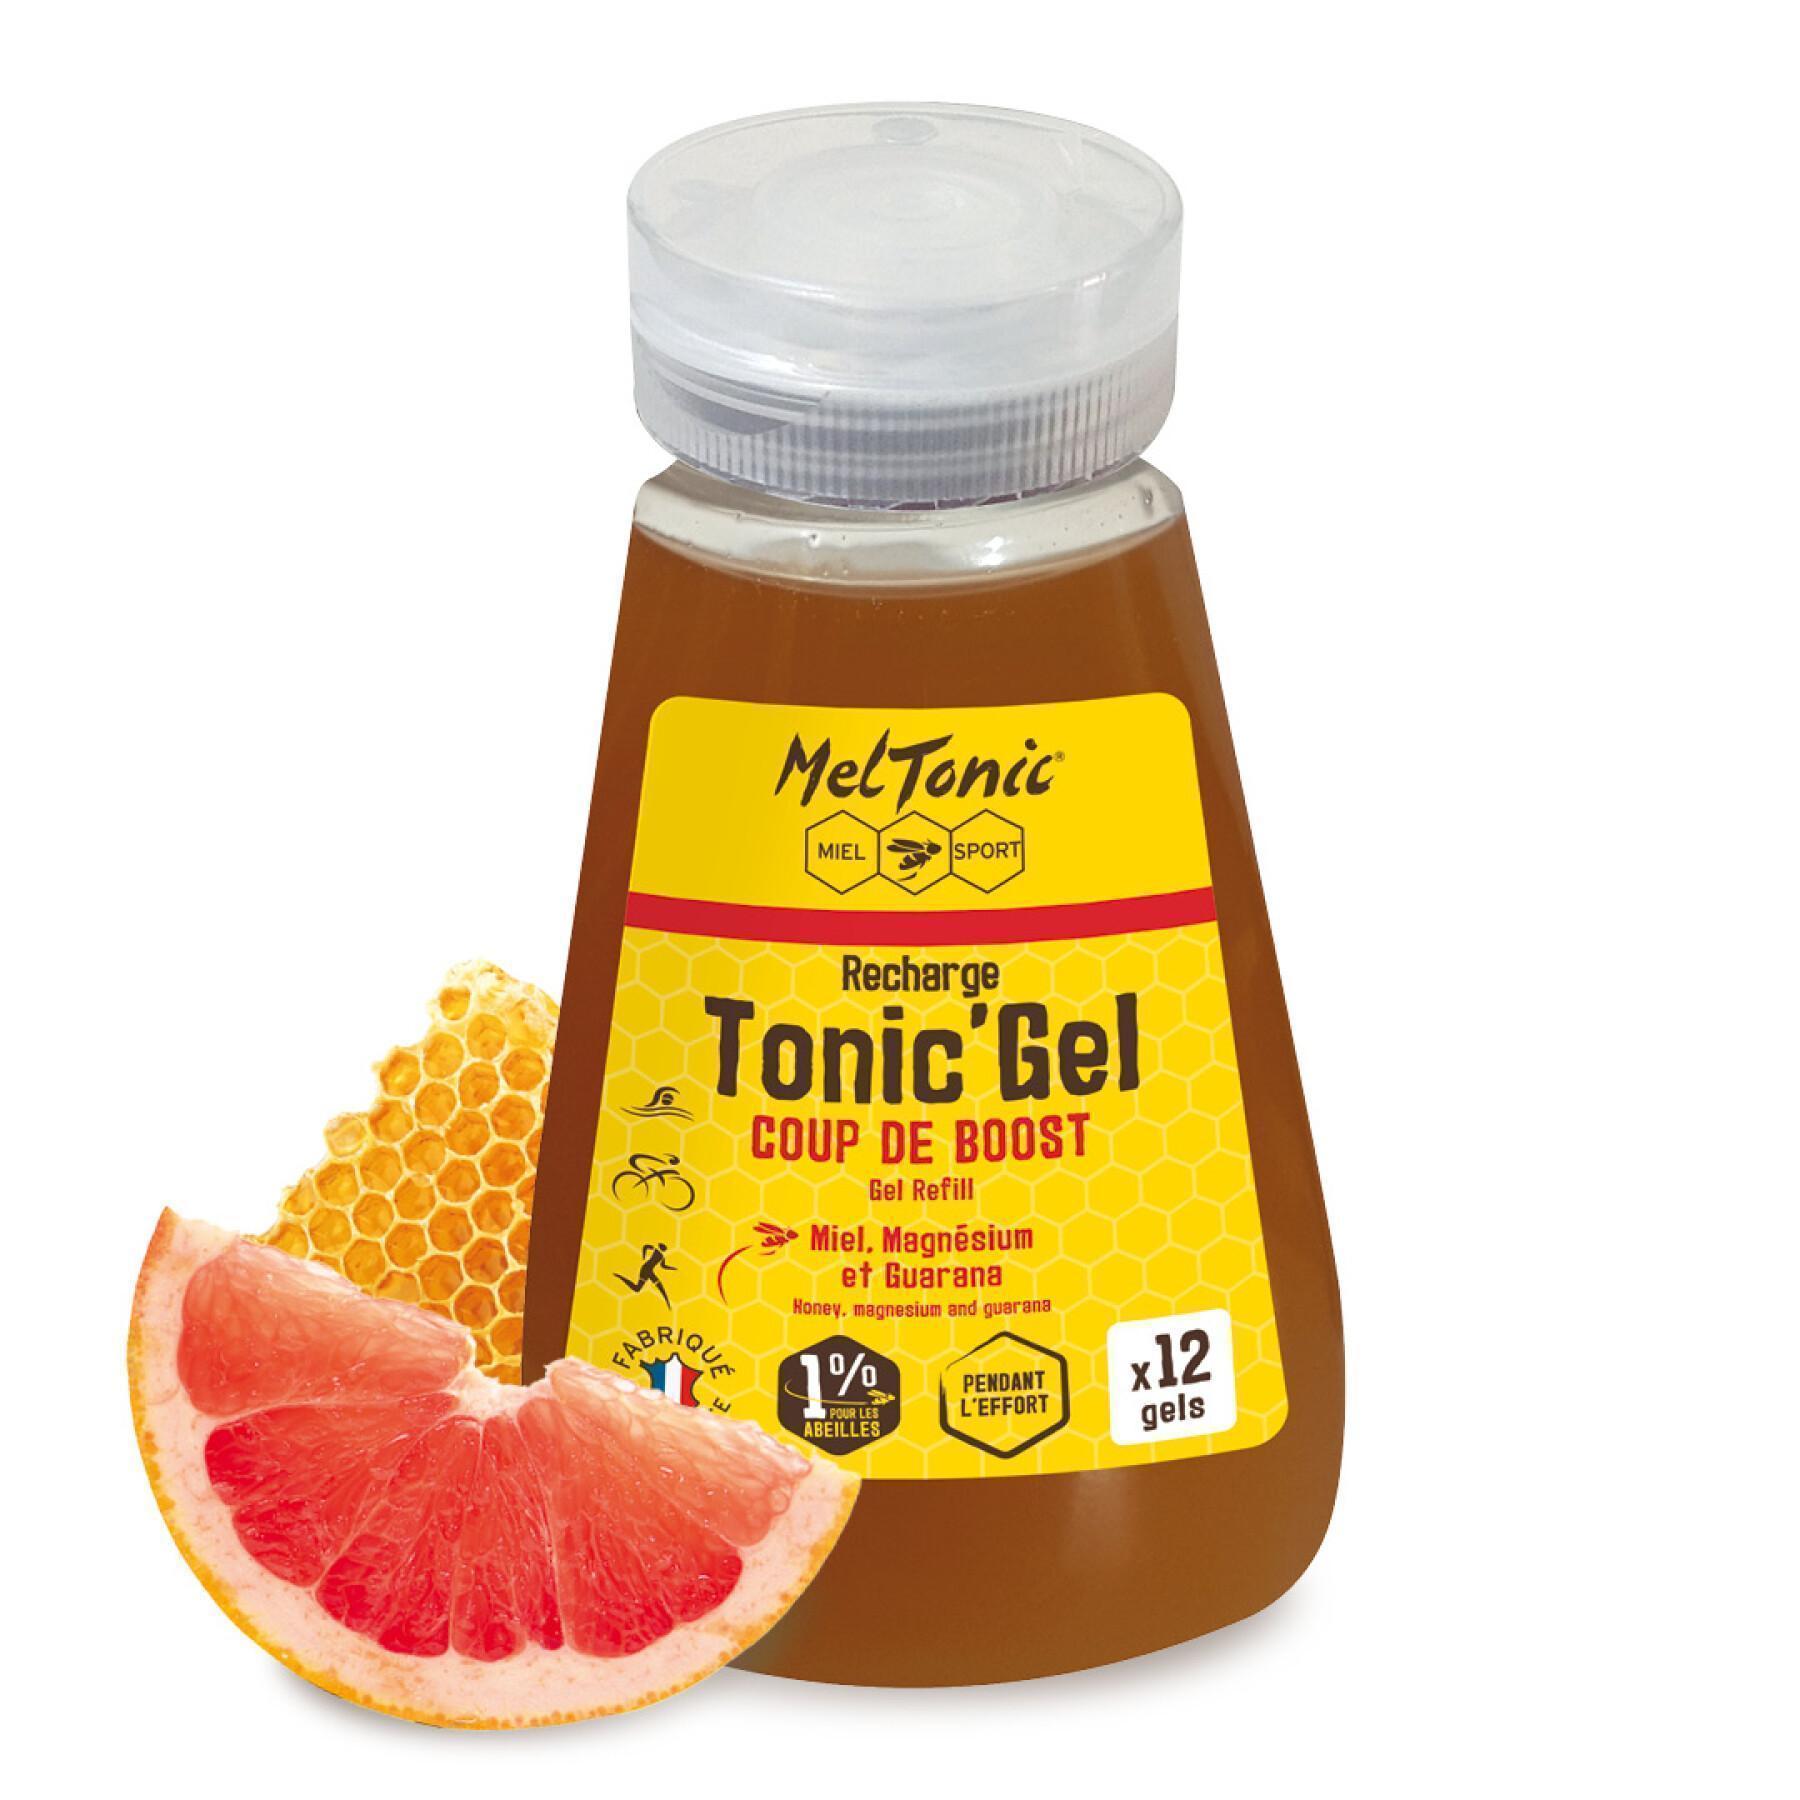 Energy gel refill Meltonic TONIC' - COUP DE BOOST